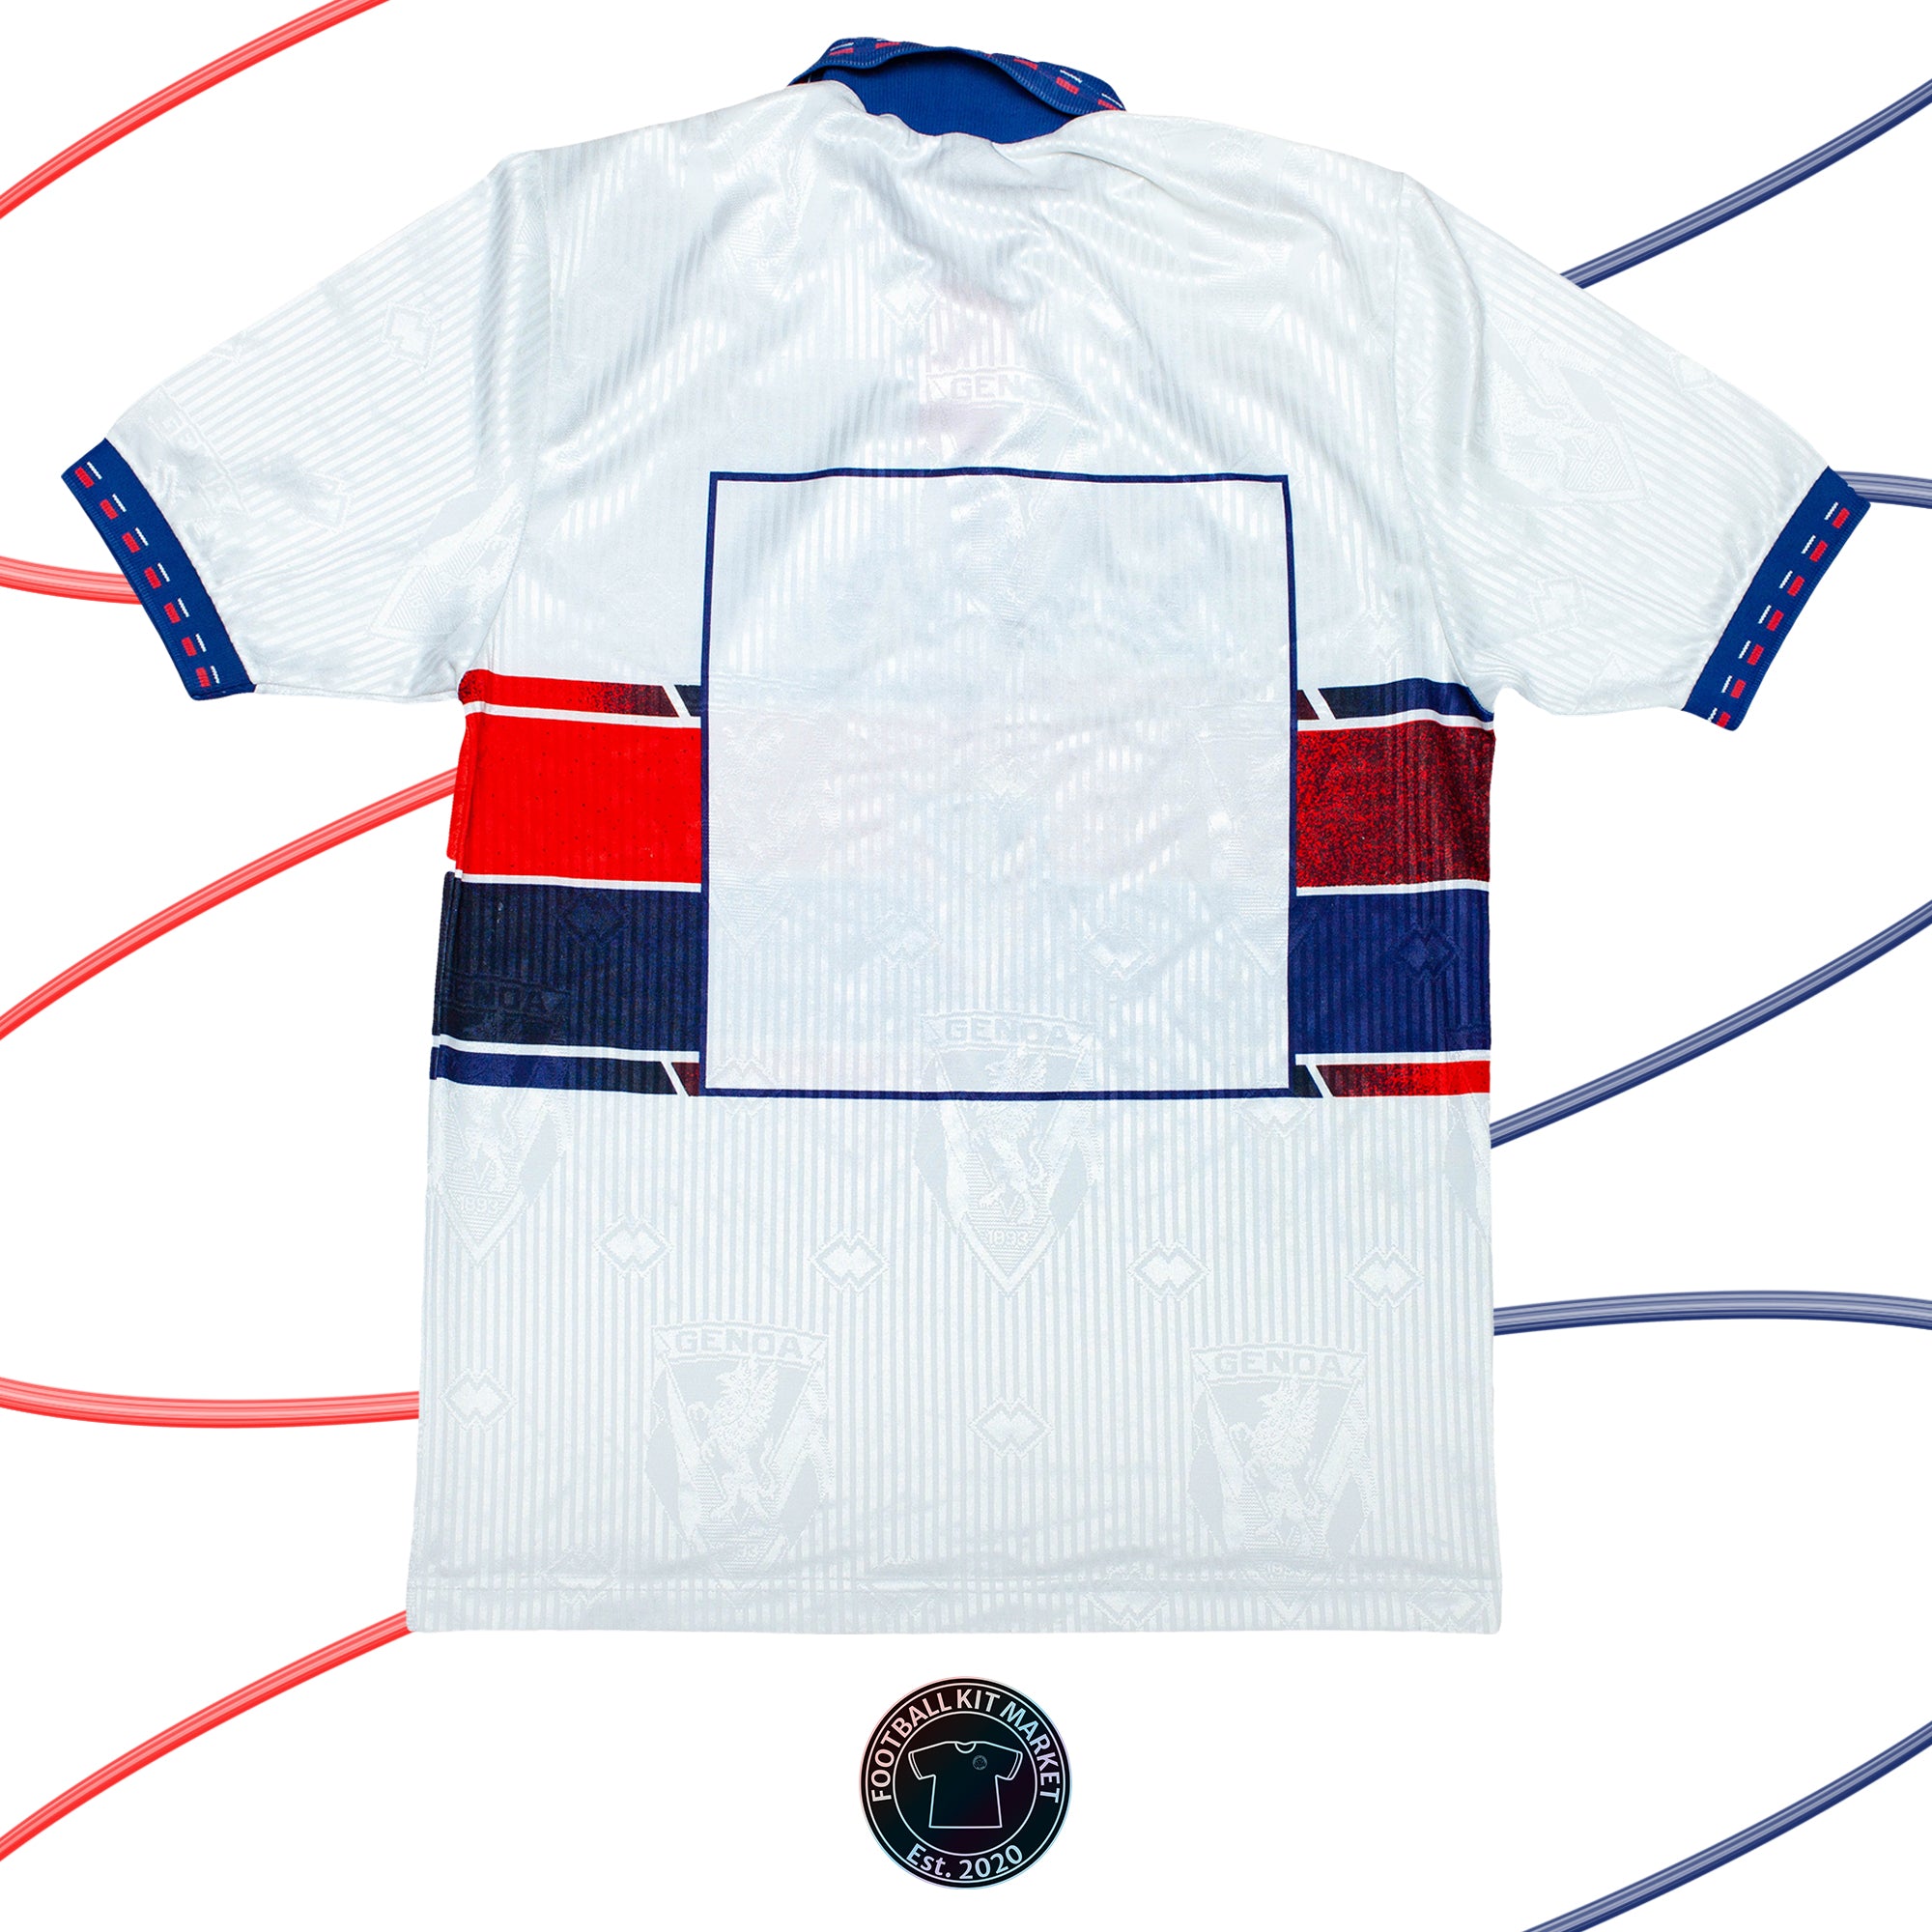 Football Kit Market Product image of genuine TORINO Training Shirt (2001-2002) - ASICS (L)